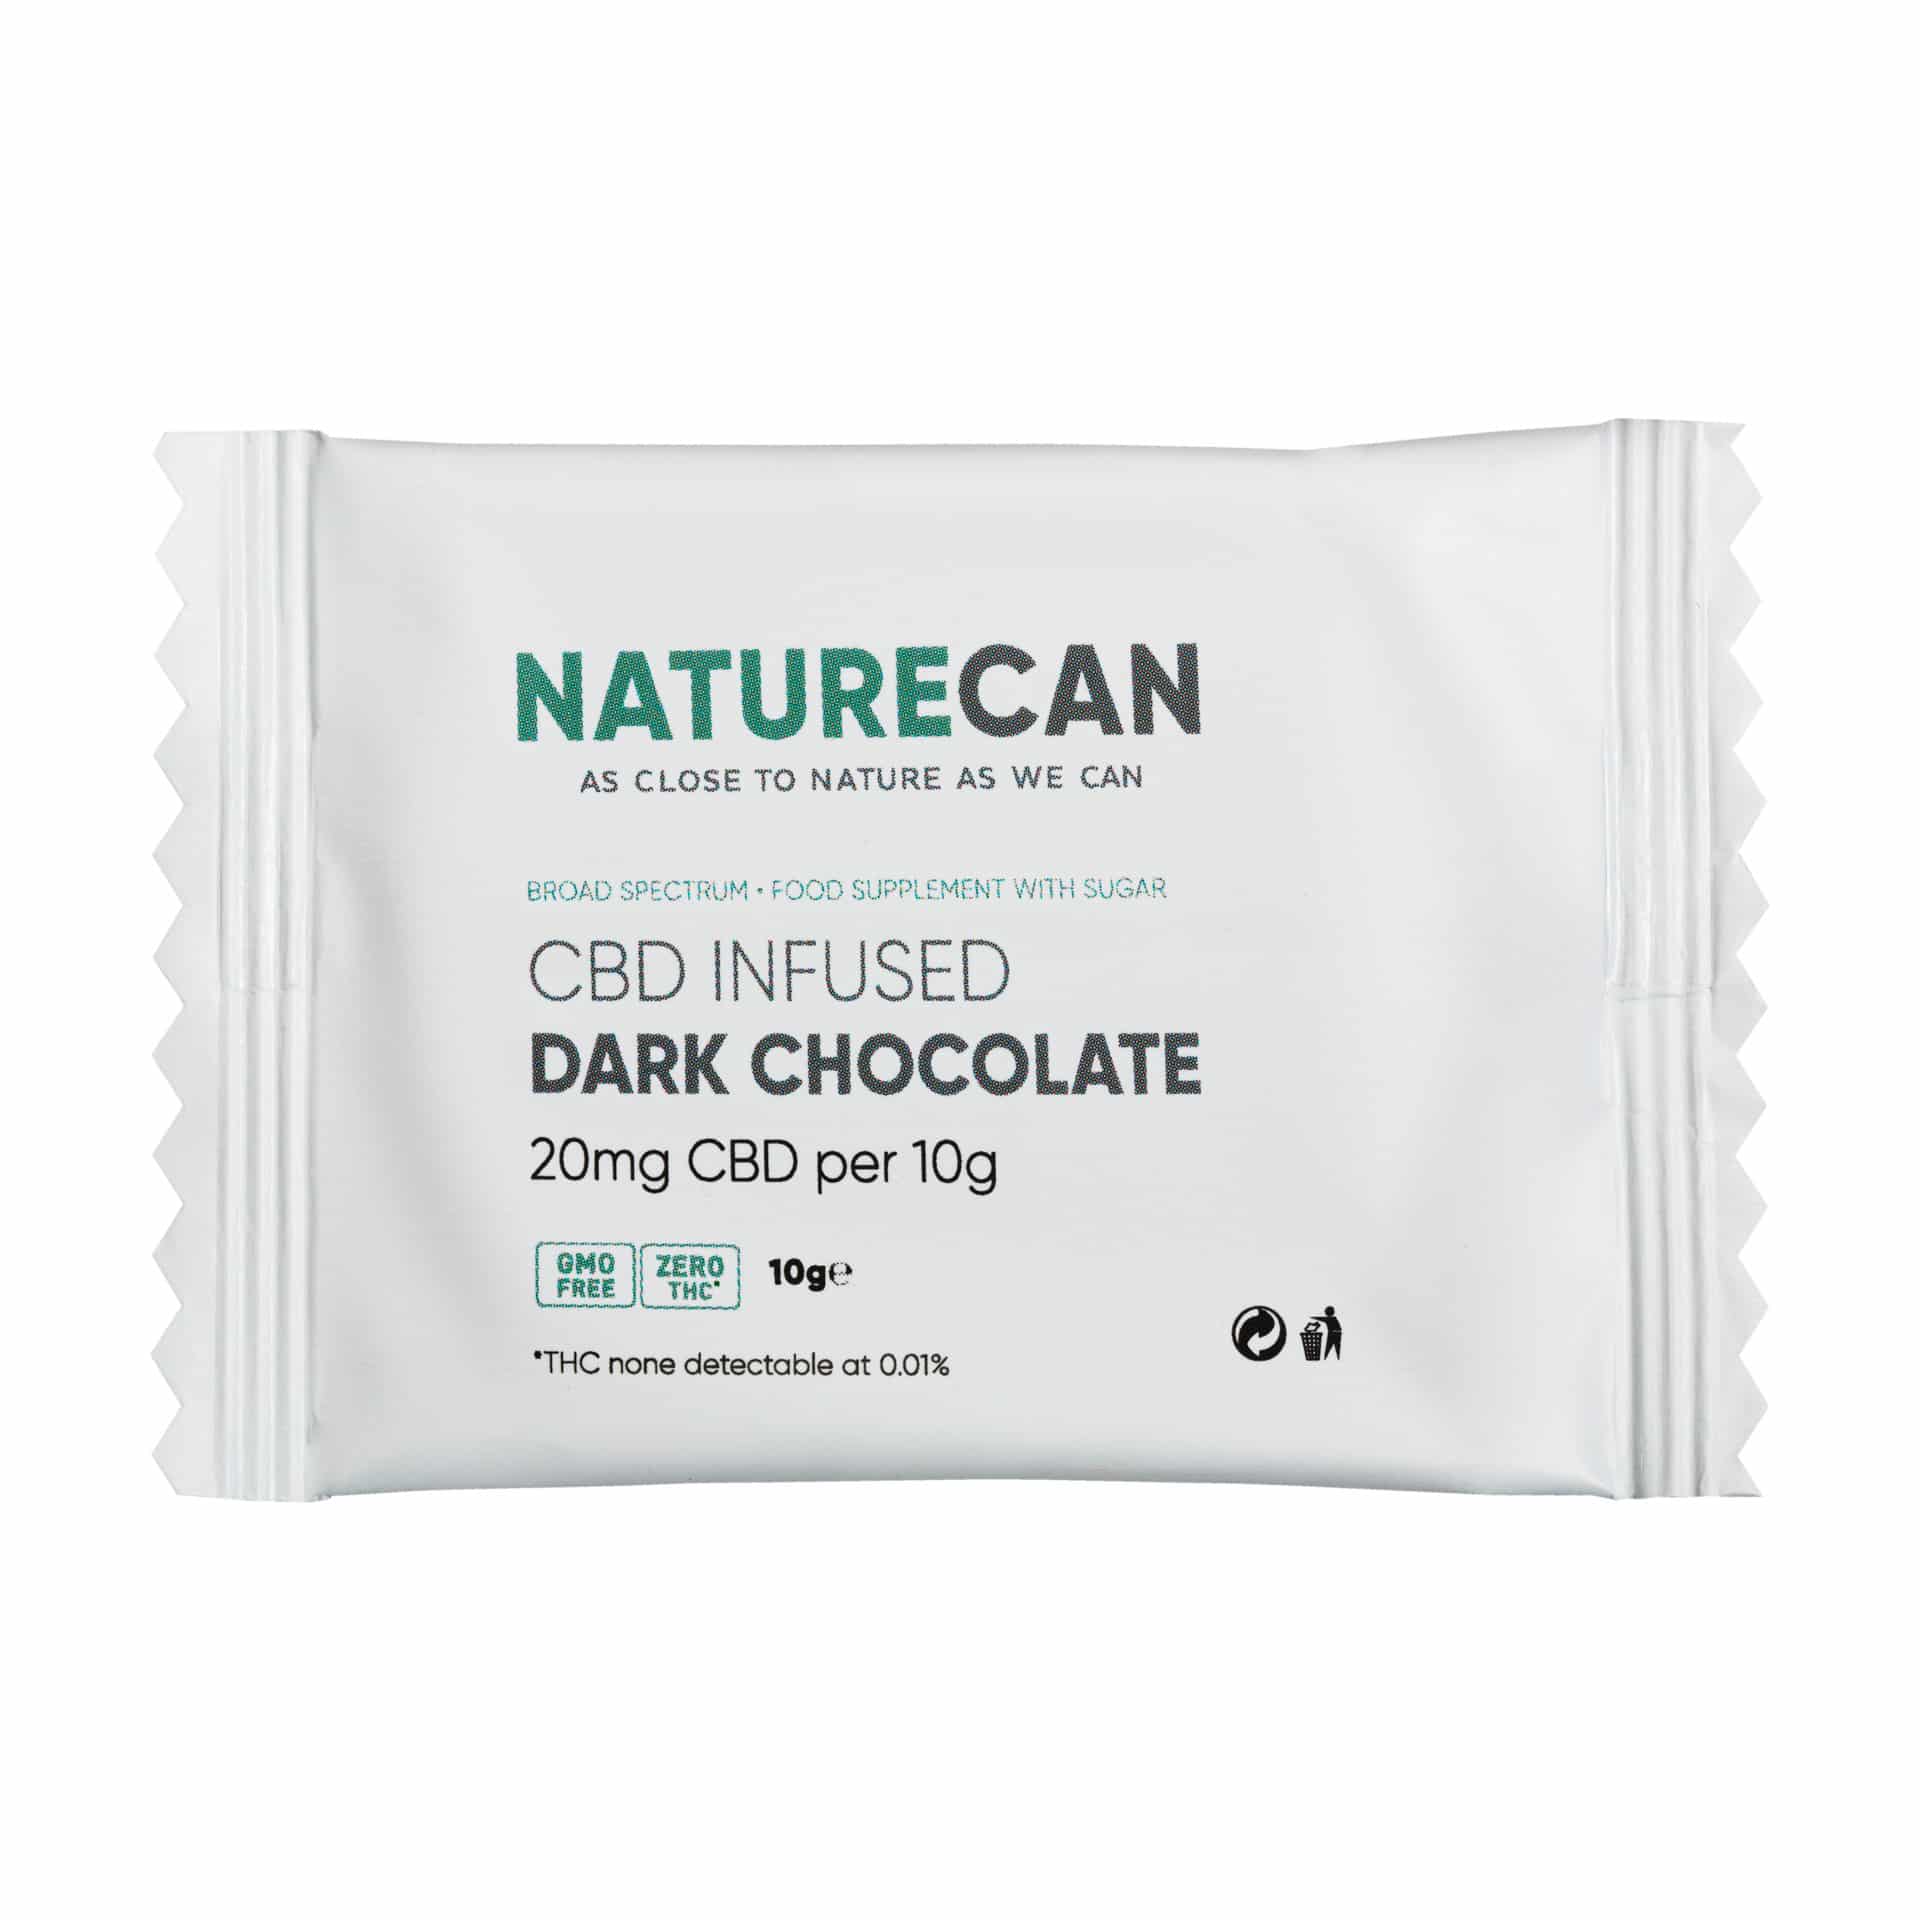 A packet of CBD dark chocolate.